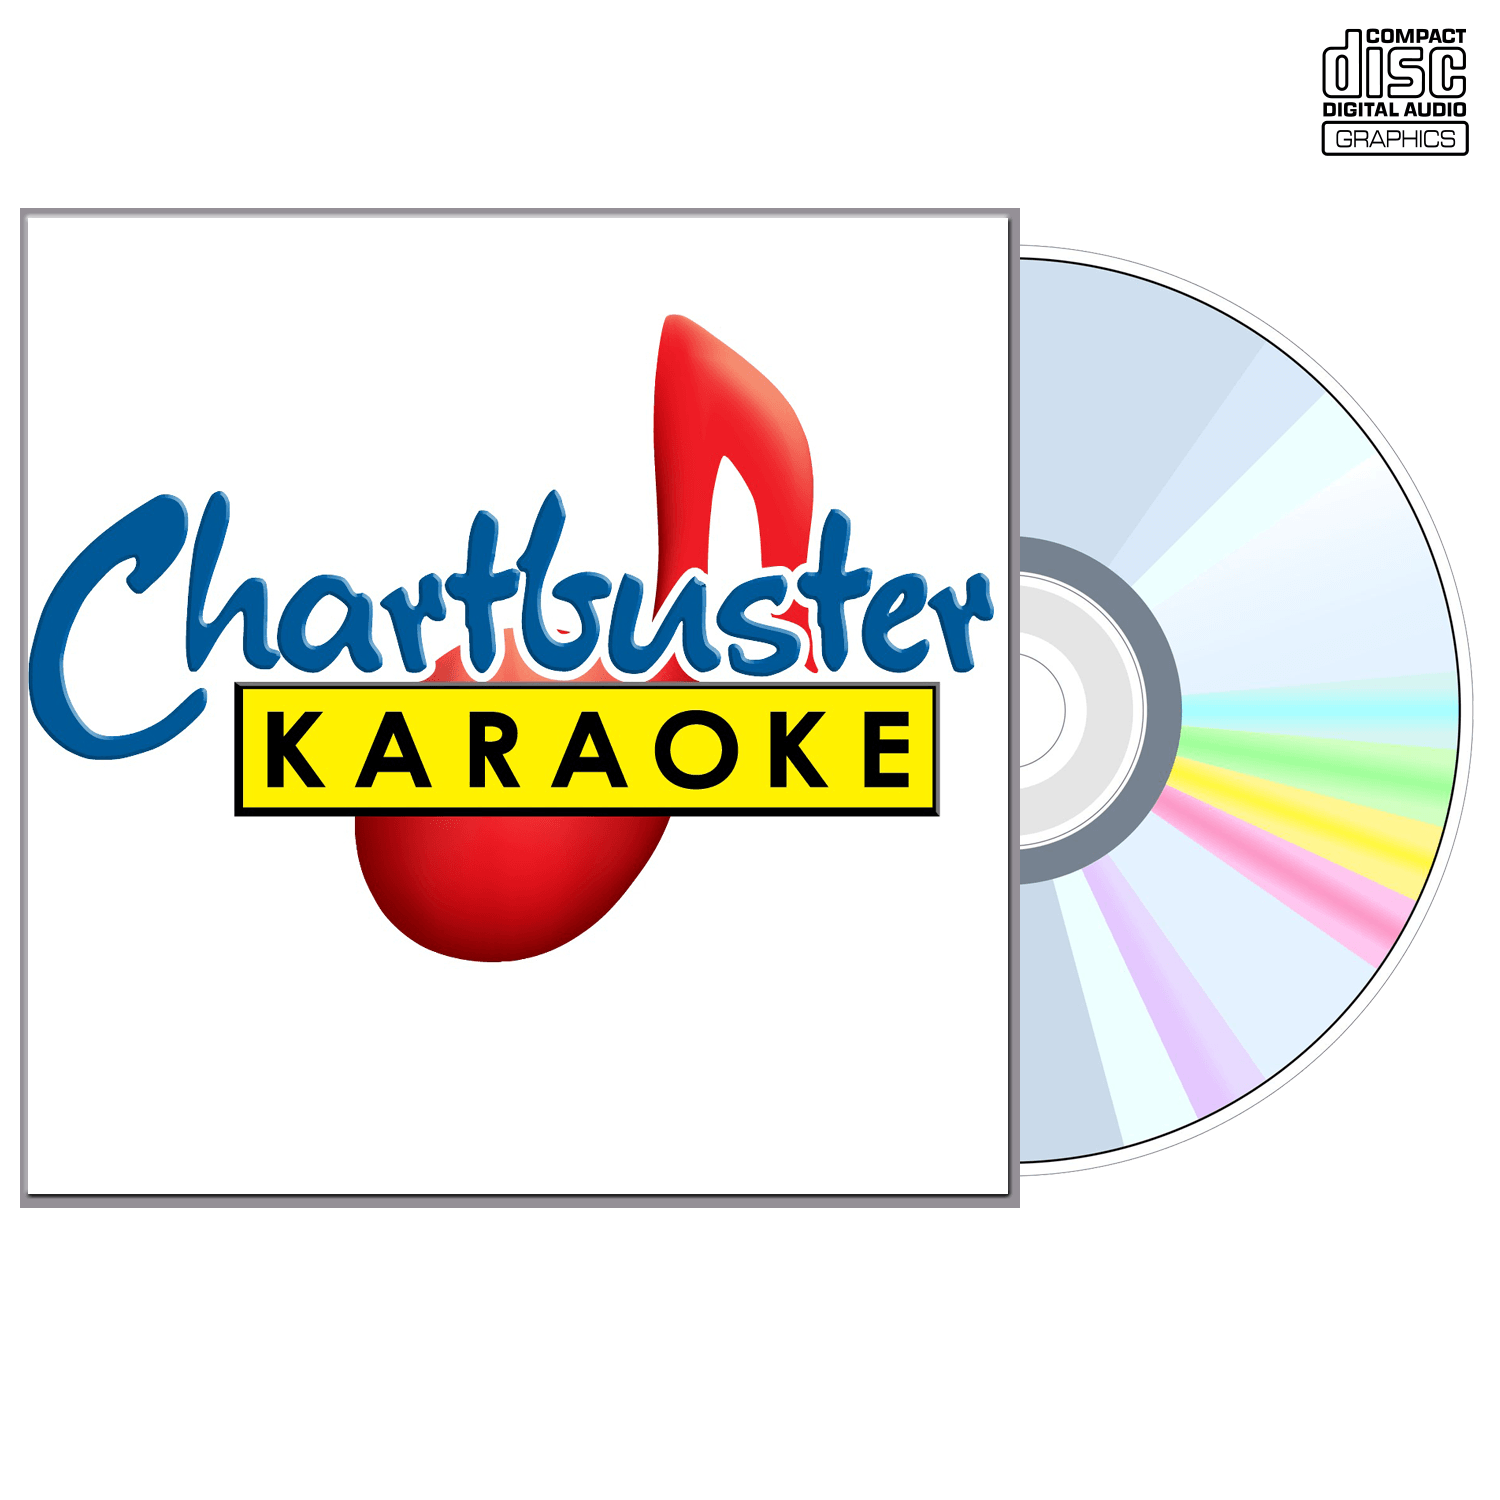 Childrens Songs Vol 2 - CD+G - Chartbuster Karaoke - Karaoke Home Entertainment